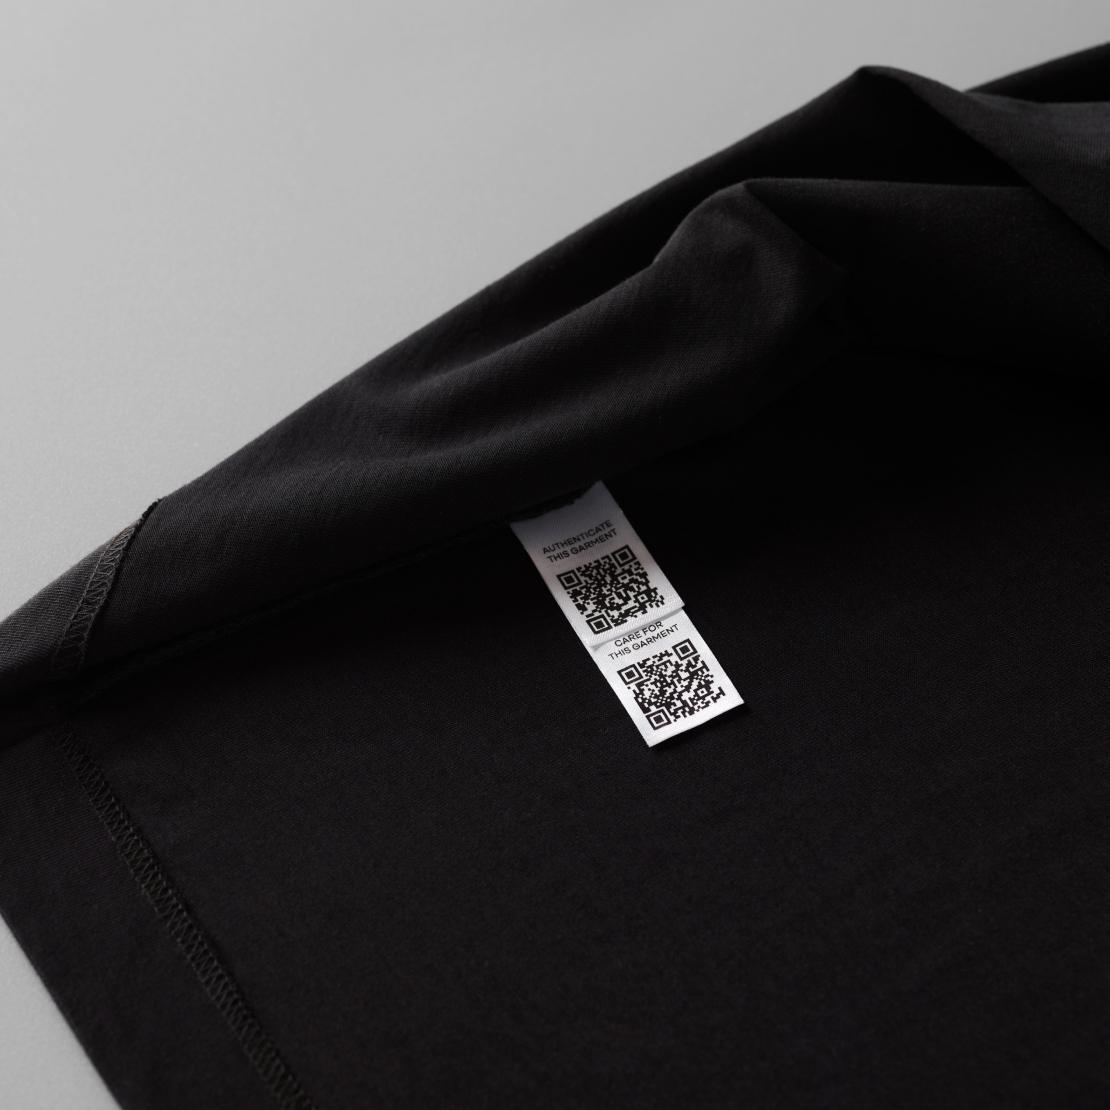 digital solutions printed fabric label